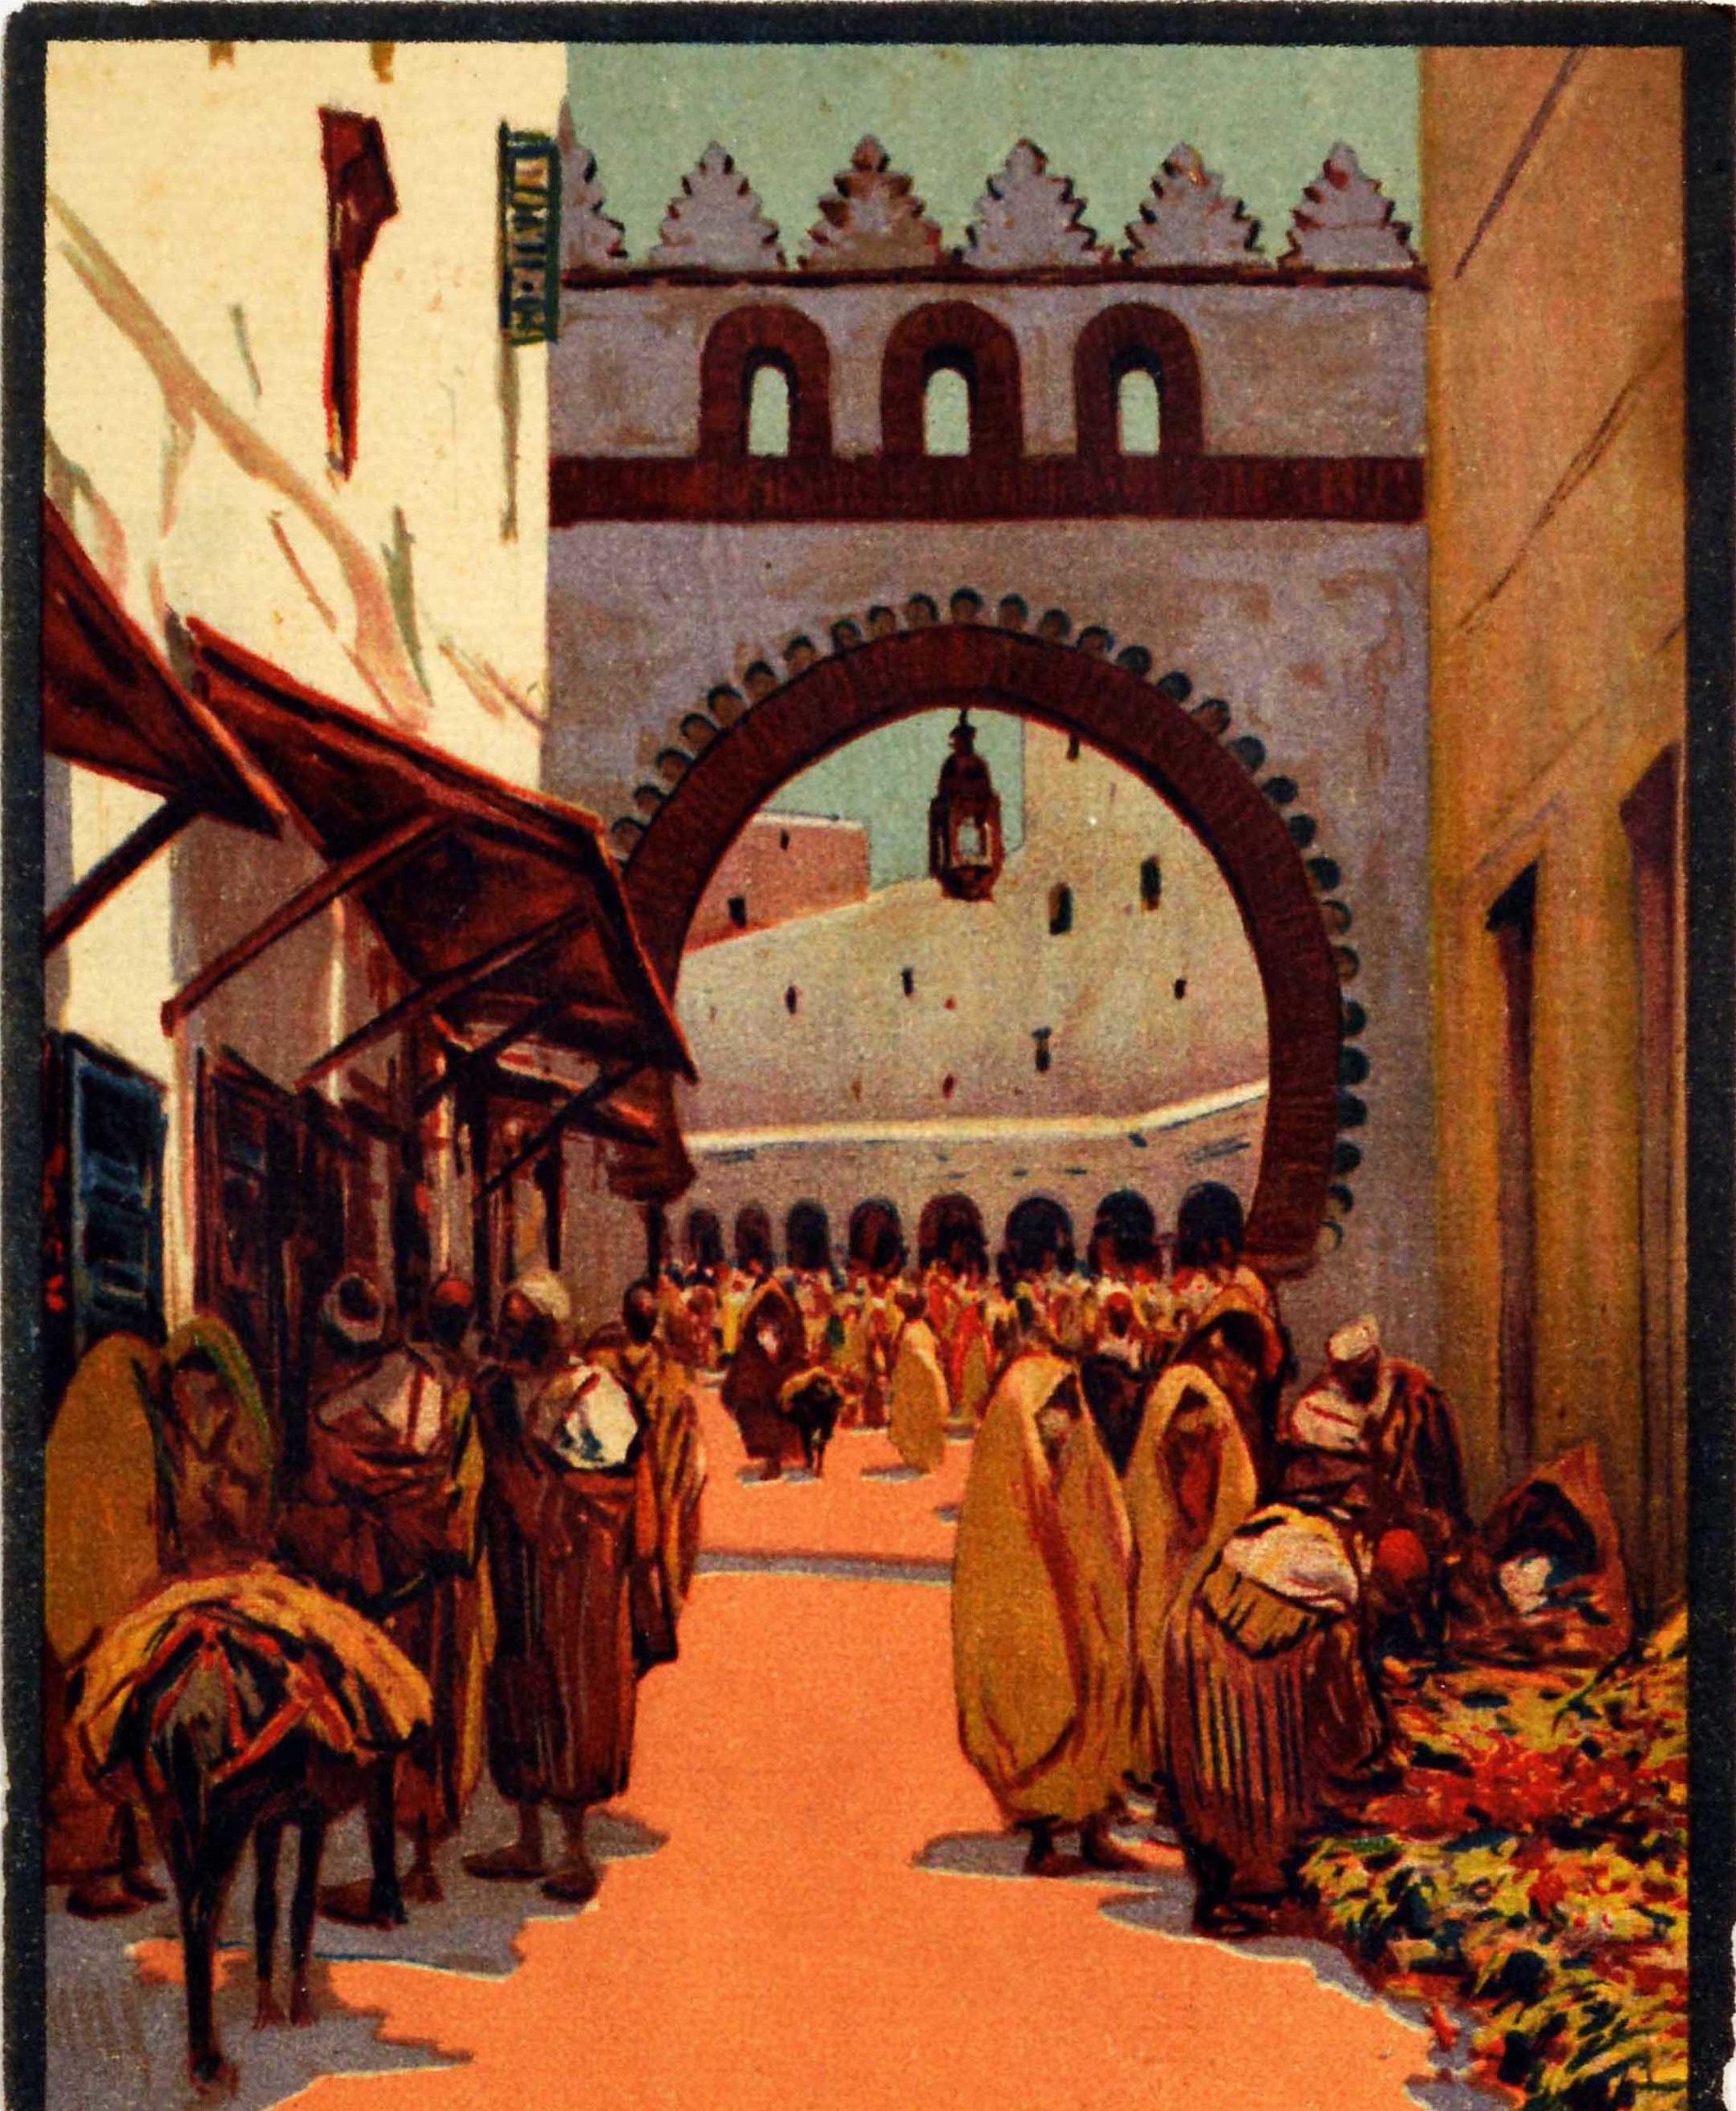 morocco vintage travel poster